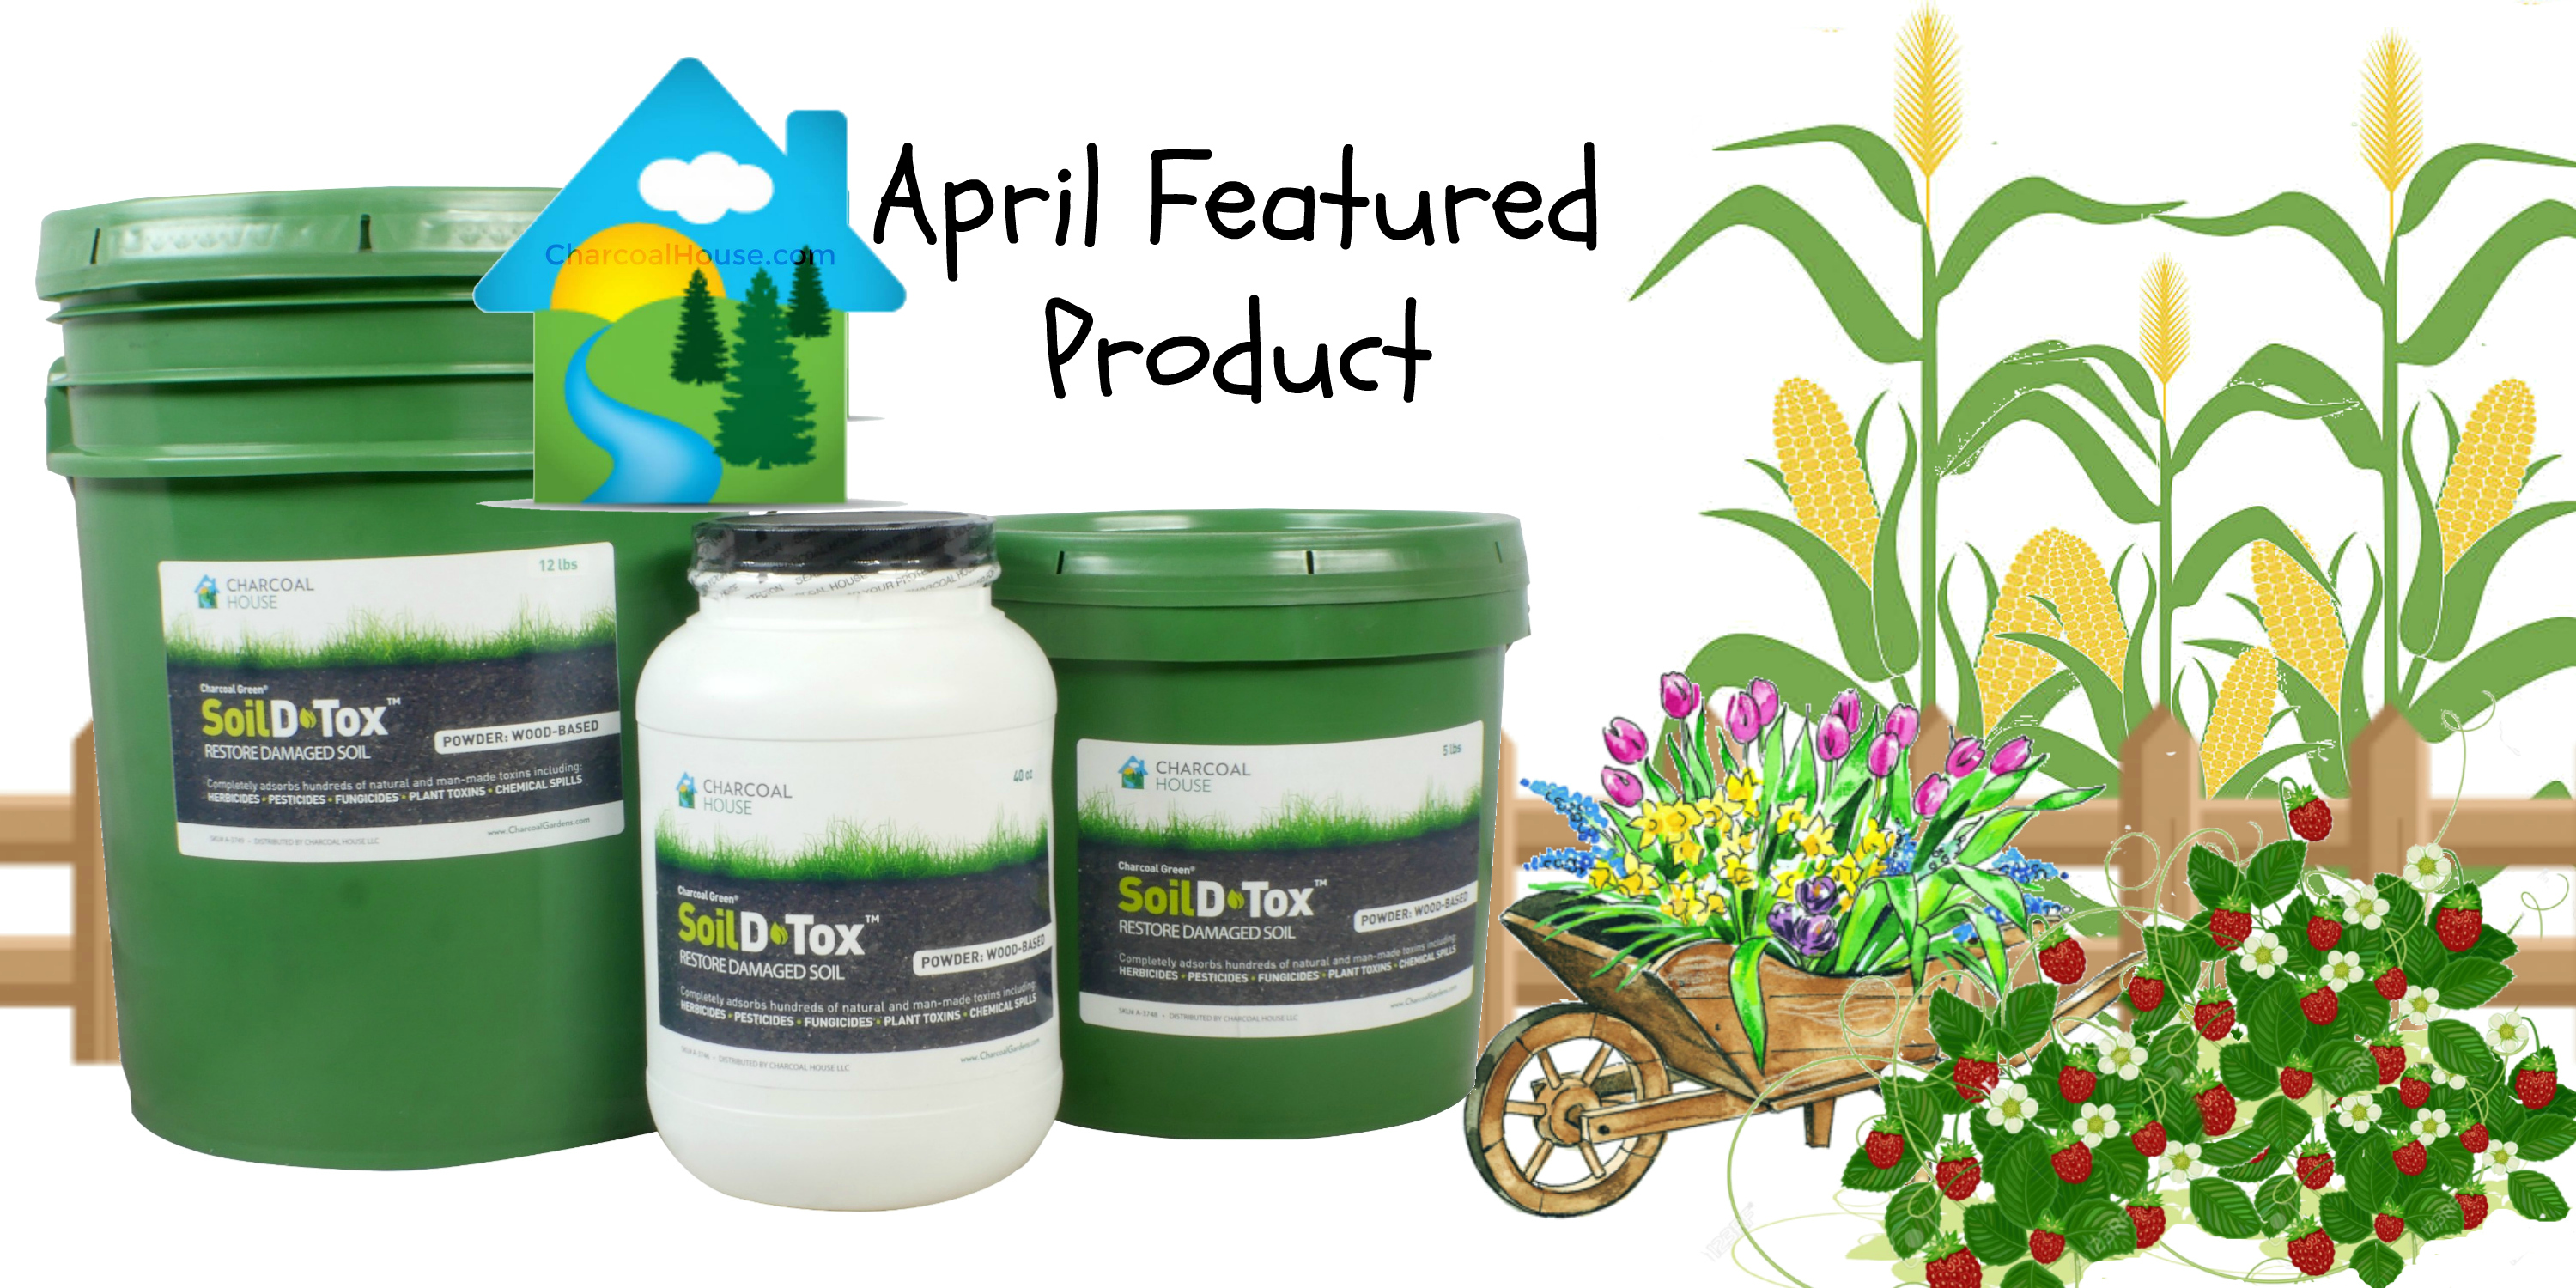 April featured product - April Featured Product: Soil D•Tox™ POWDER Wood-based